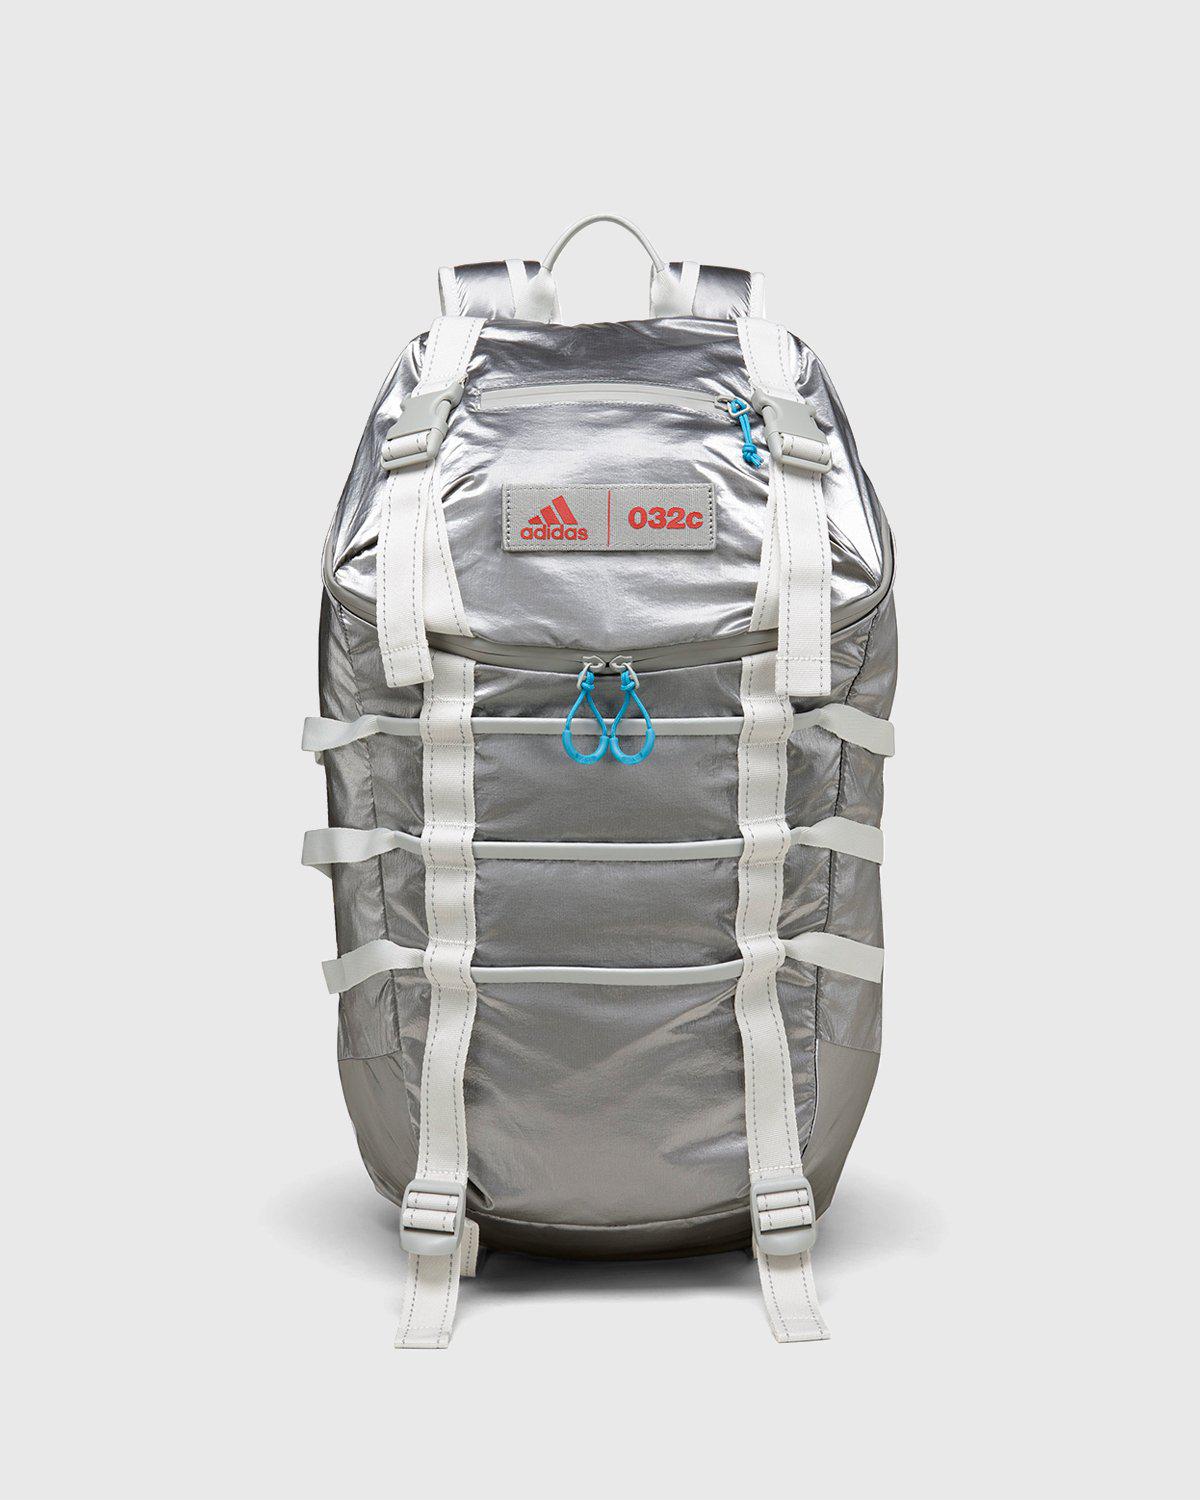 Adidas x 032c – Backpack Greone by ADIDAS X 032C